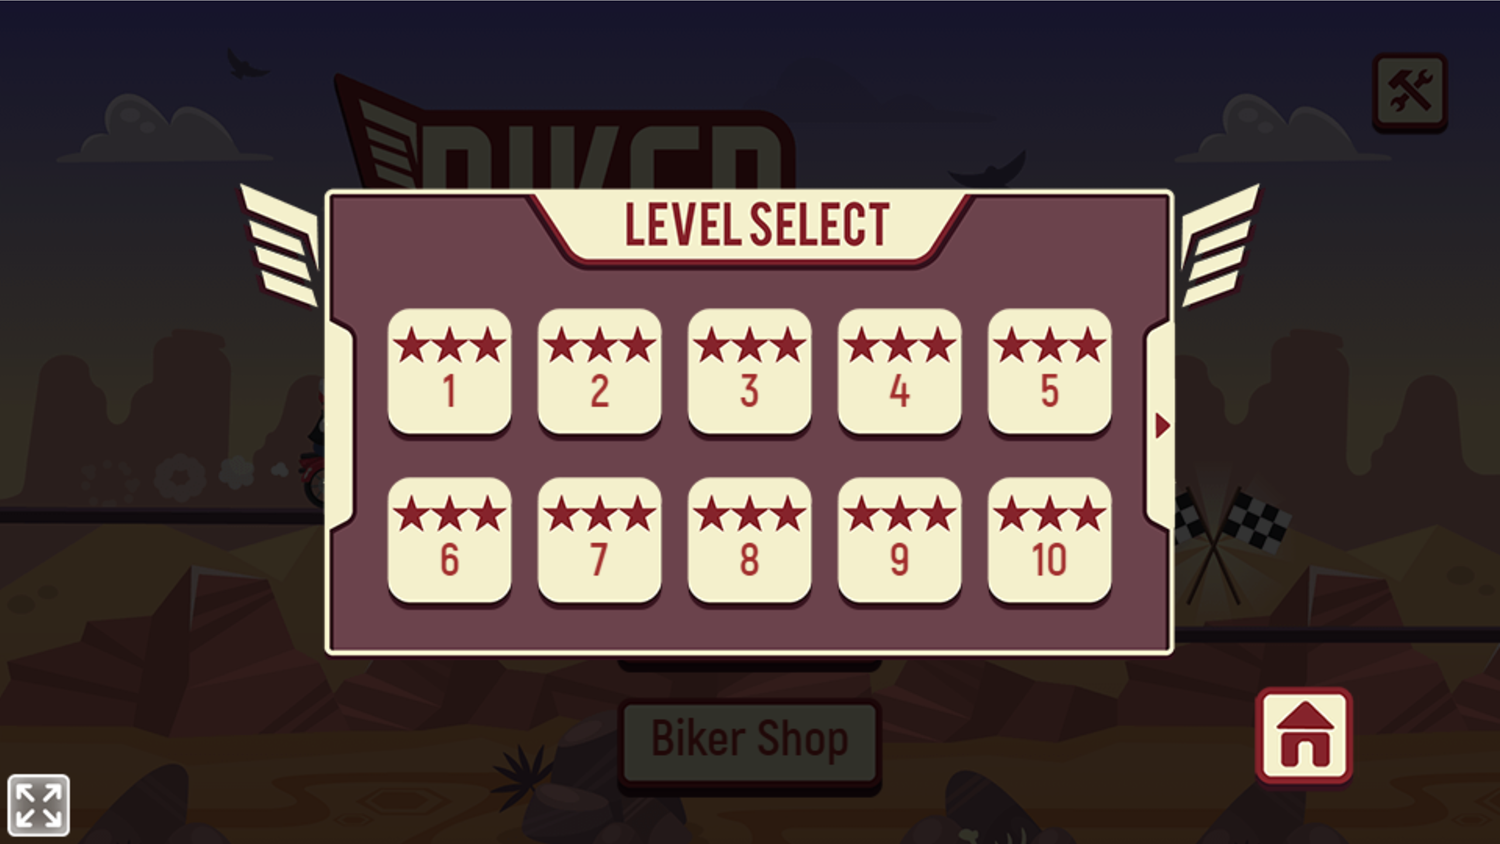 Biker Lane Game Level Select Screen Screenshot.